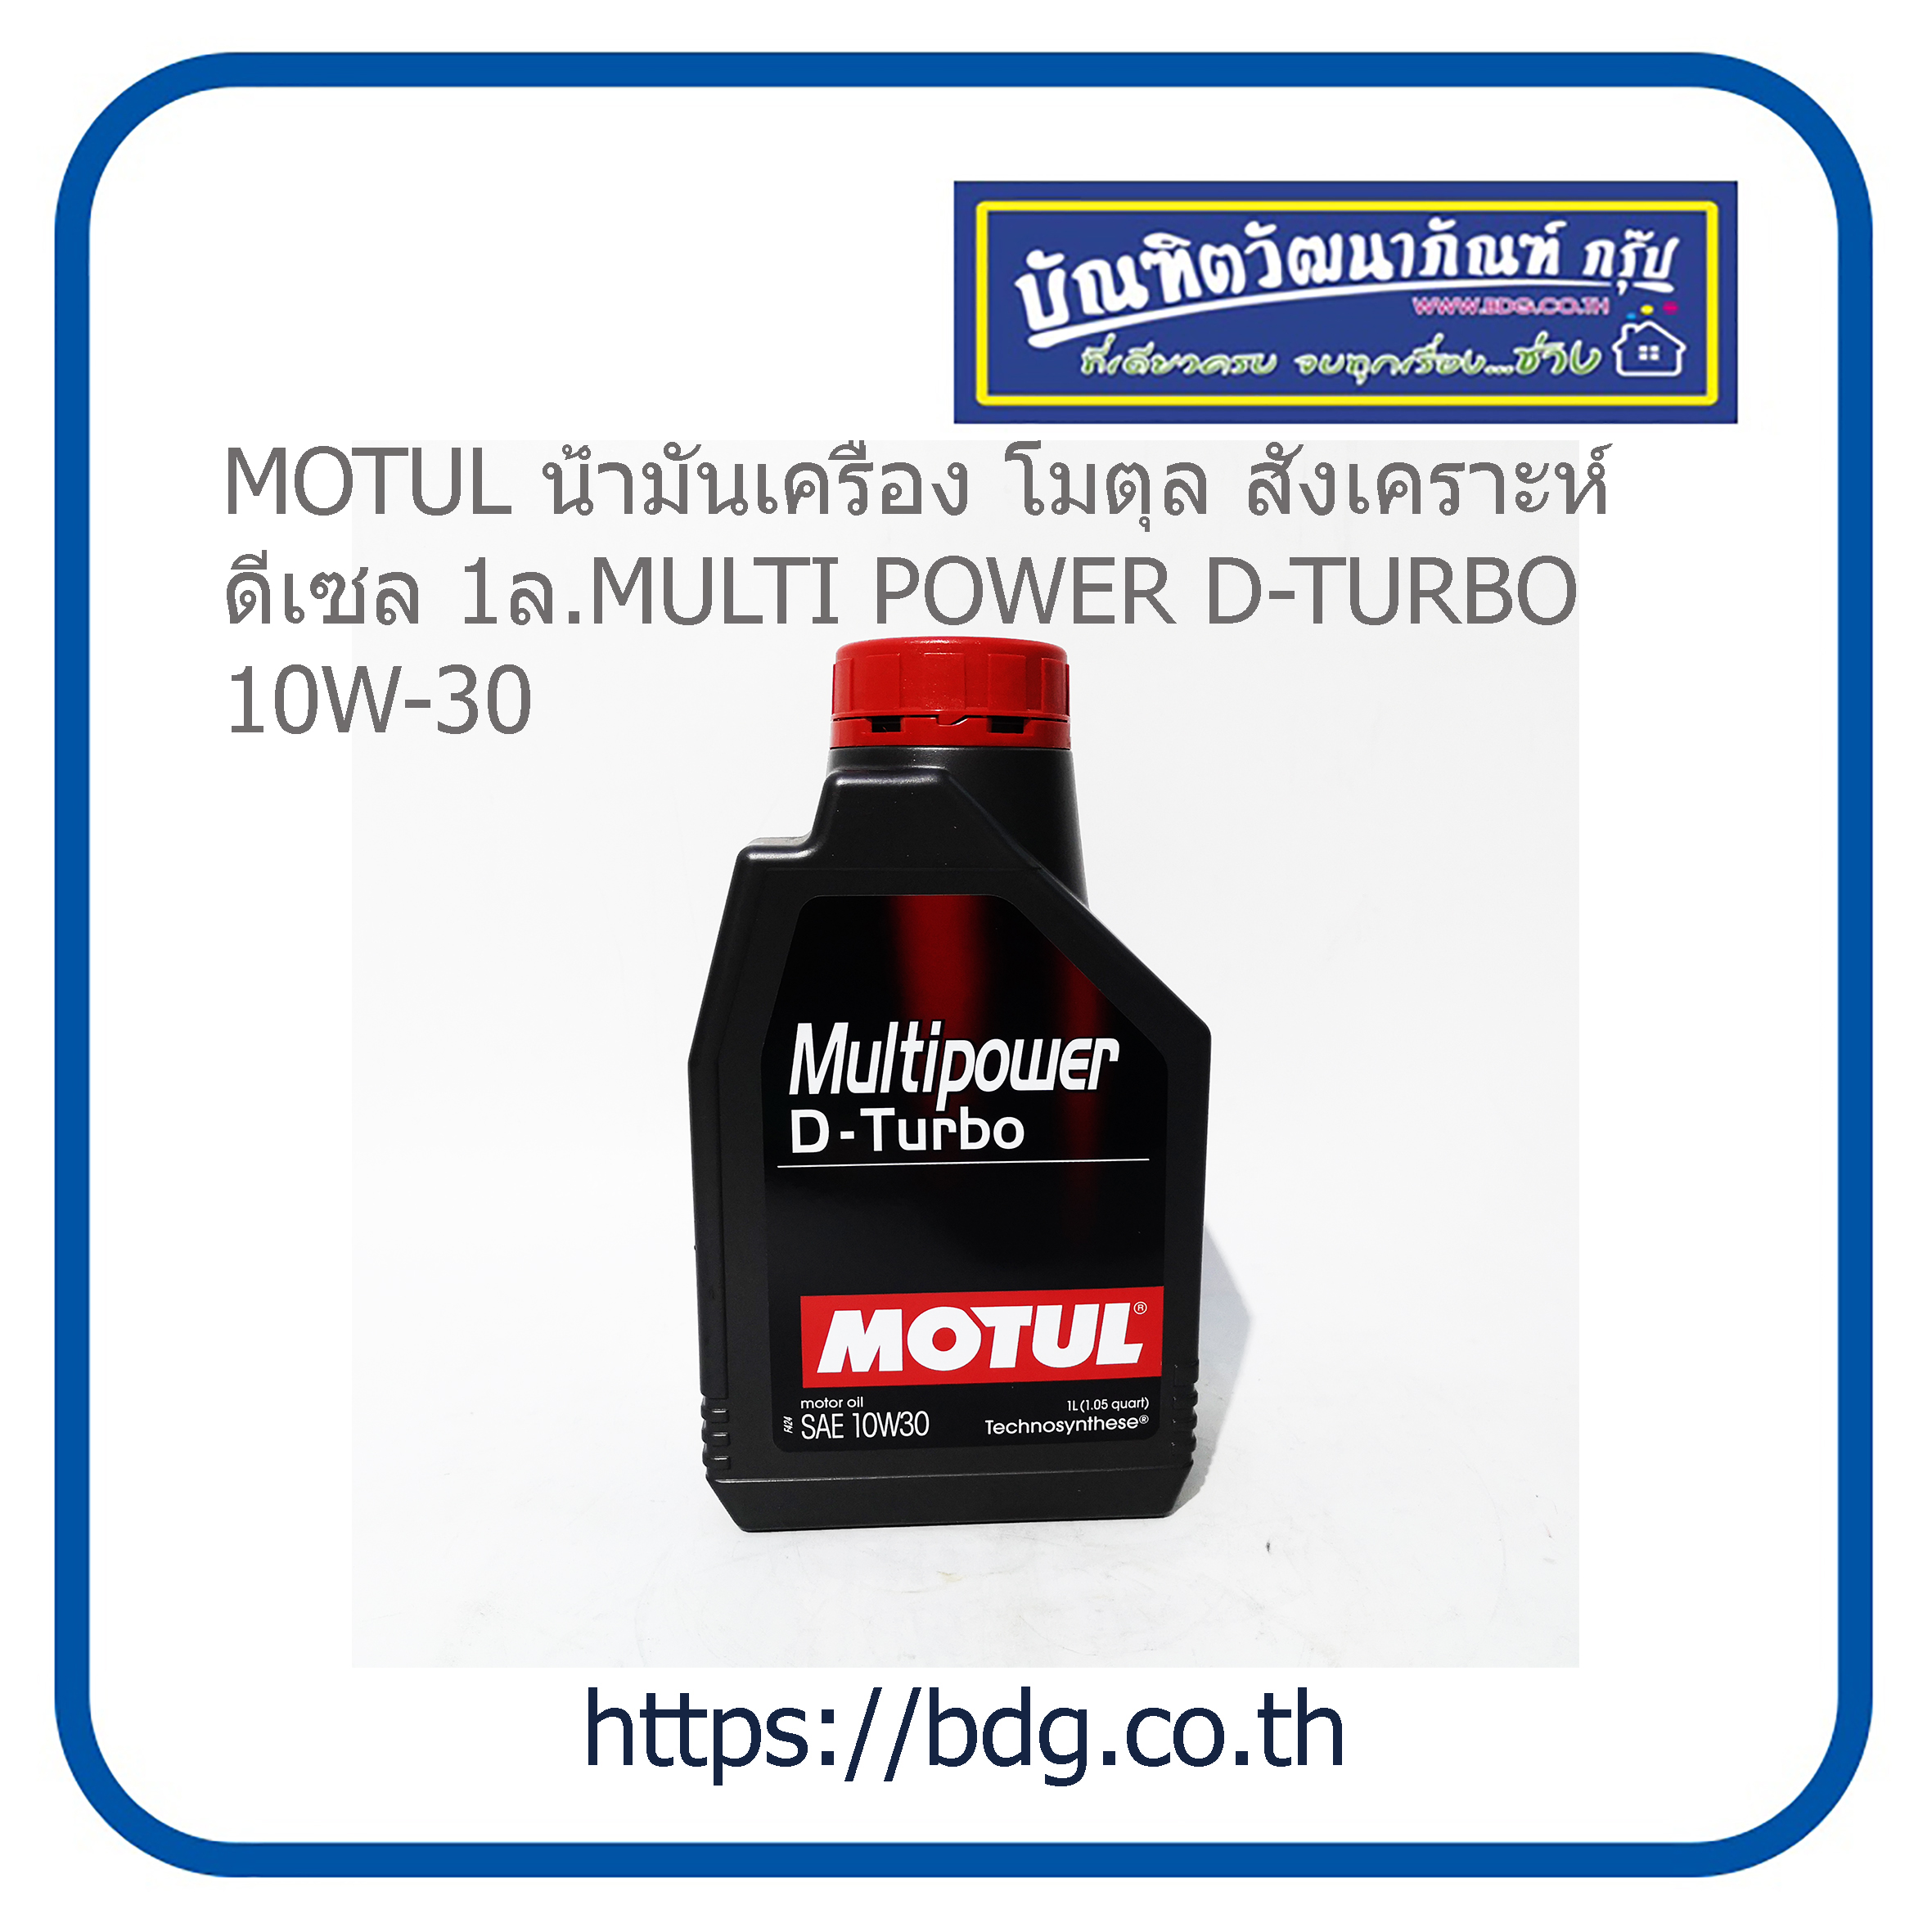 MOTUL นํ้ามันเครื่อง โมตุล สังเคราะห์ ดีเซล 1ล.MULTI POWER D-TURBO 10W-30